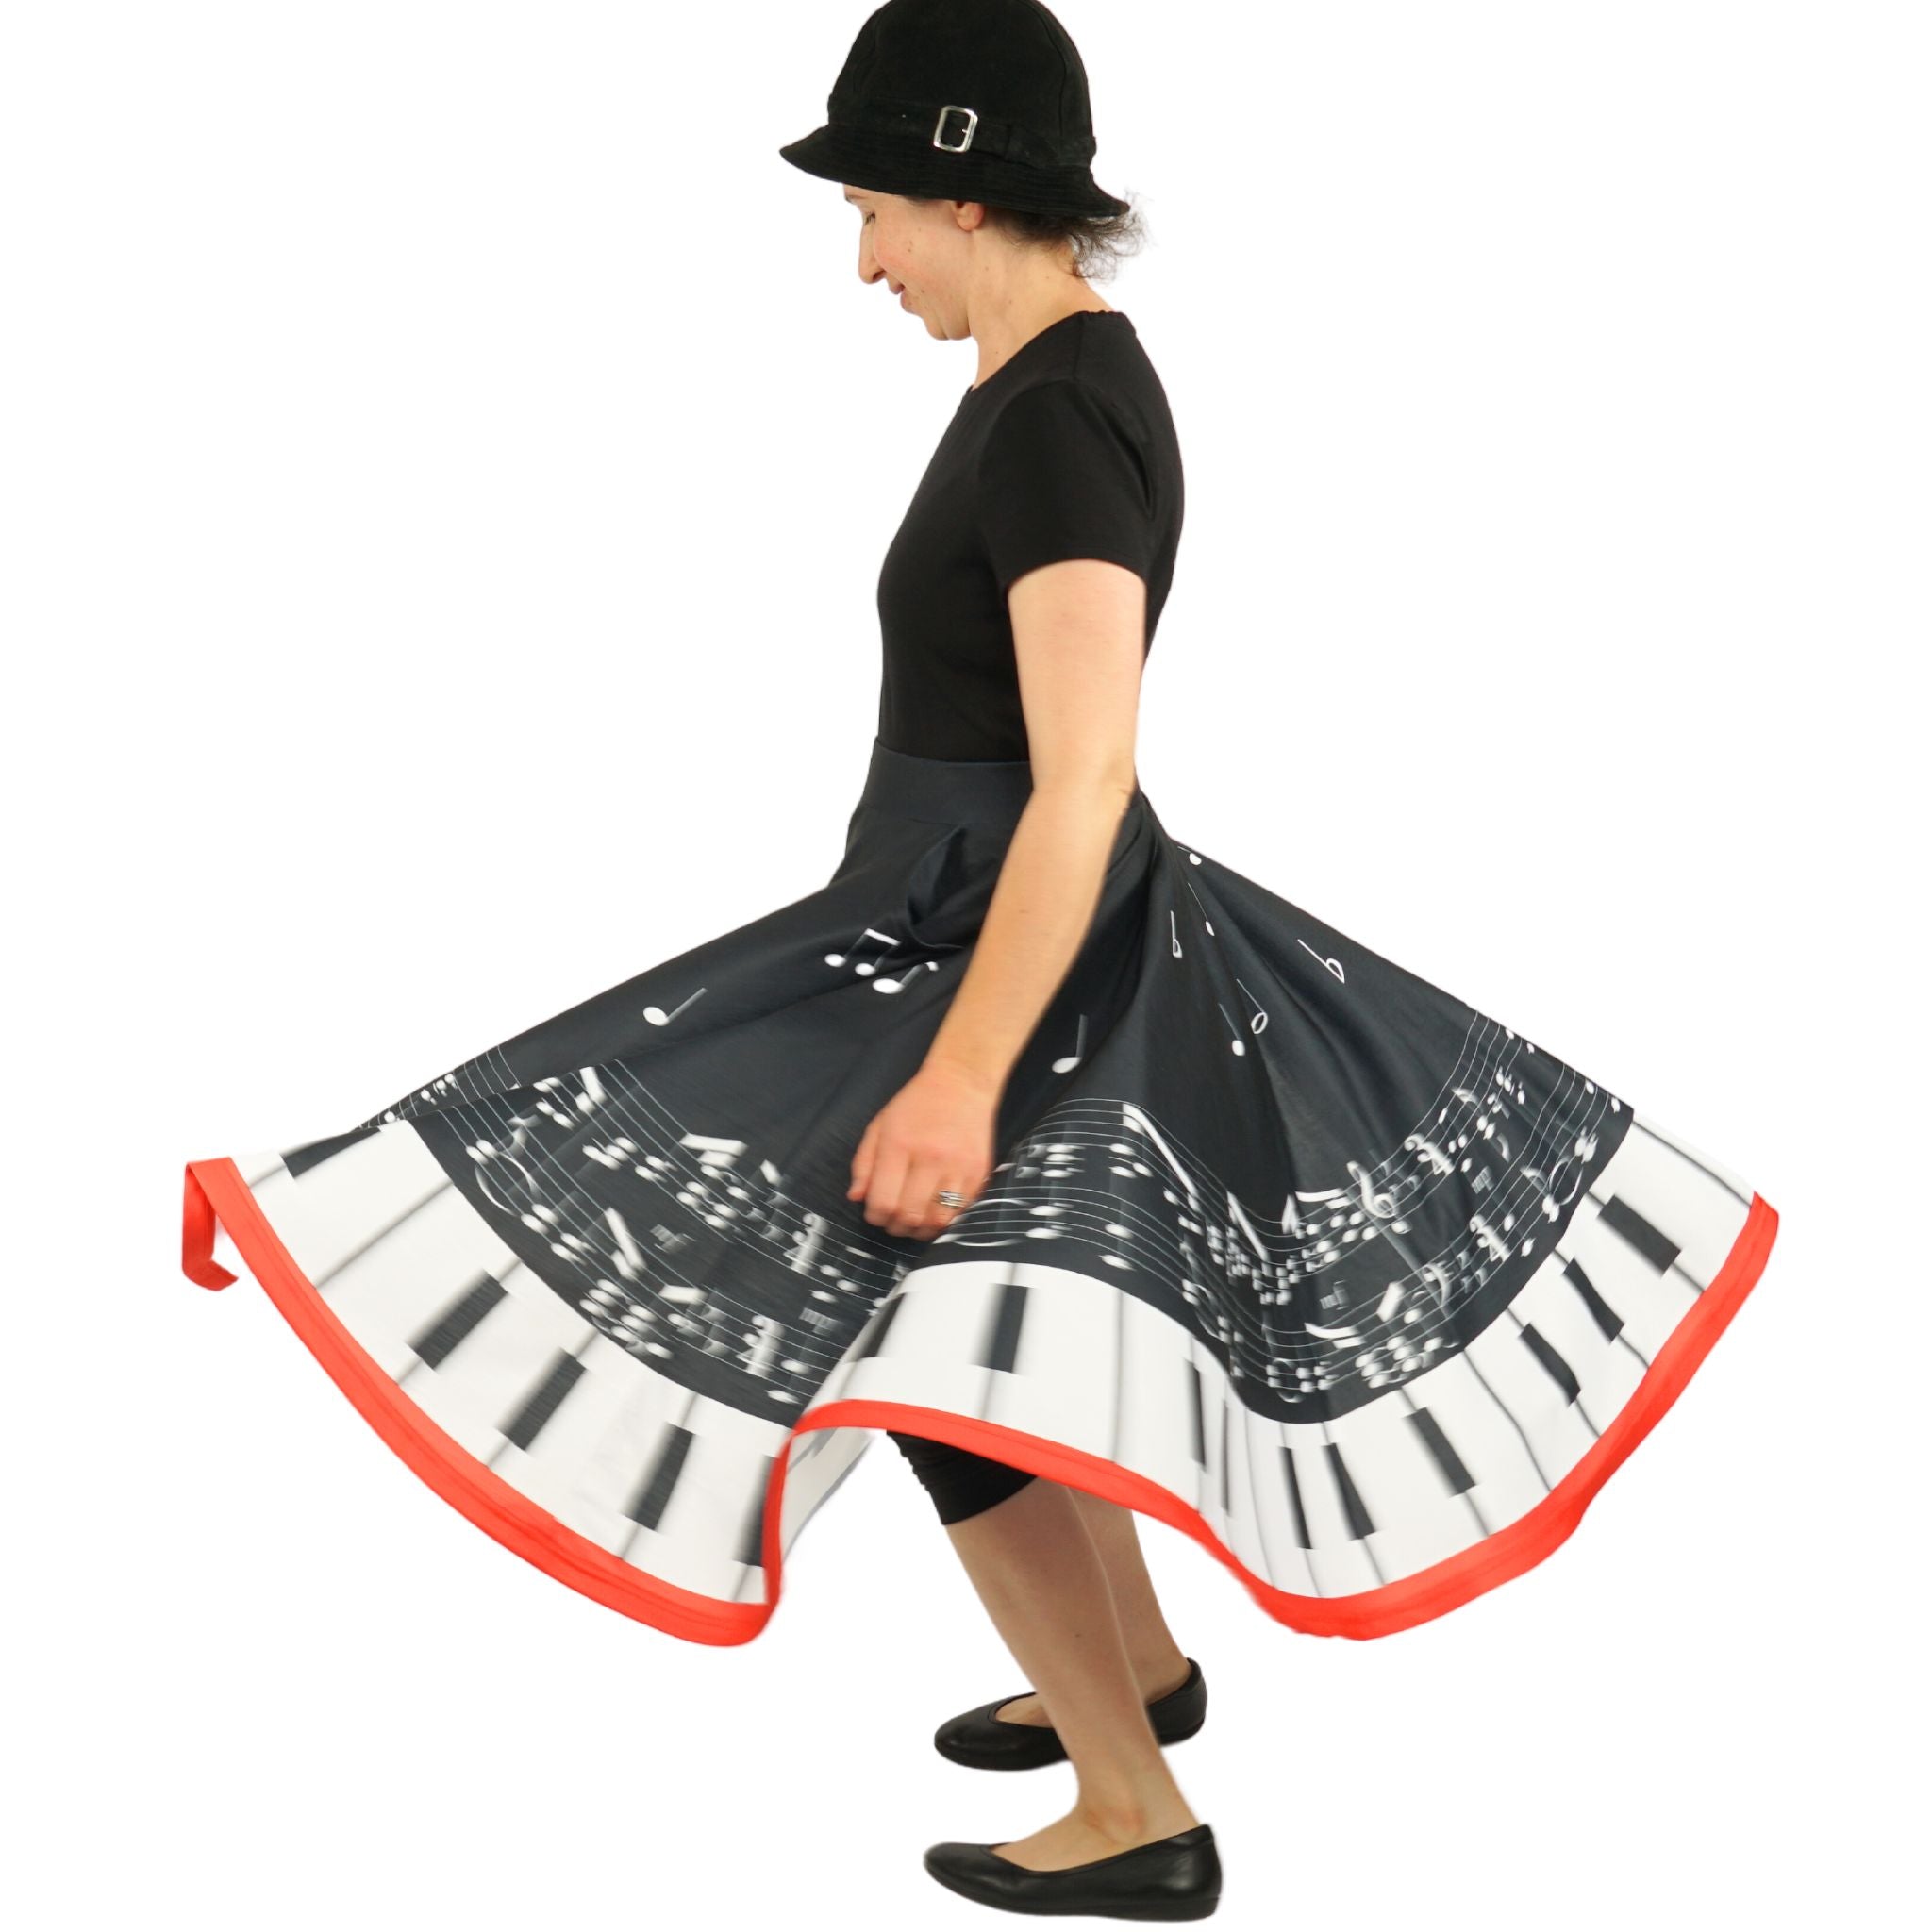 Piano Keys Twirl Skirt